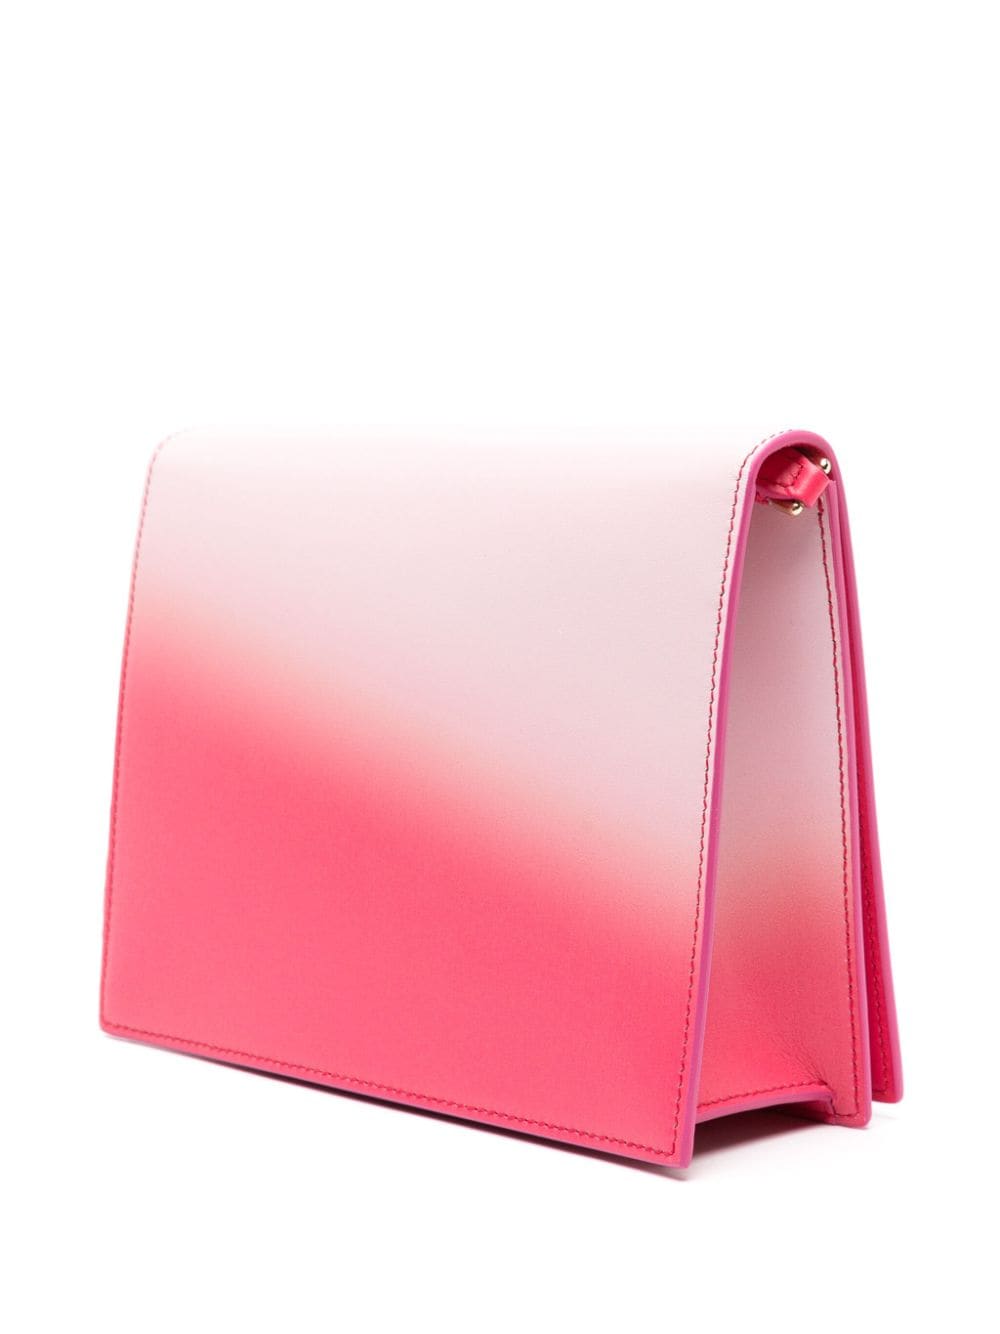 DOLCE & GABBANA Rose Pink Ombre Leather Crossbody Handbag for Women